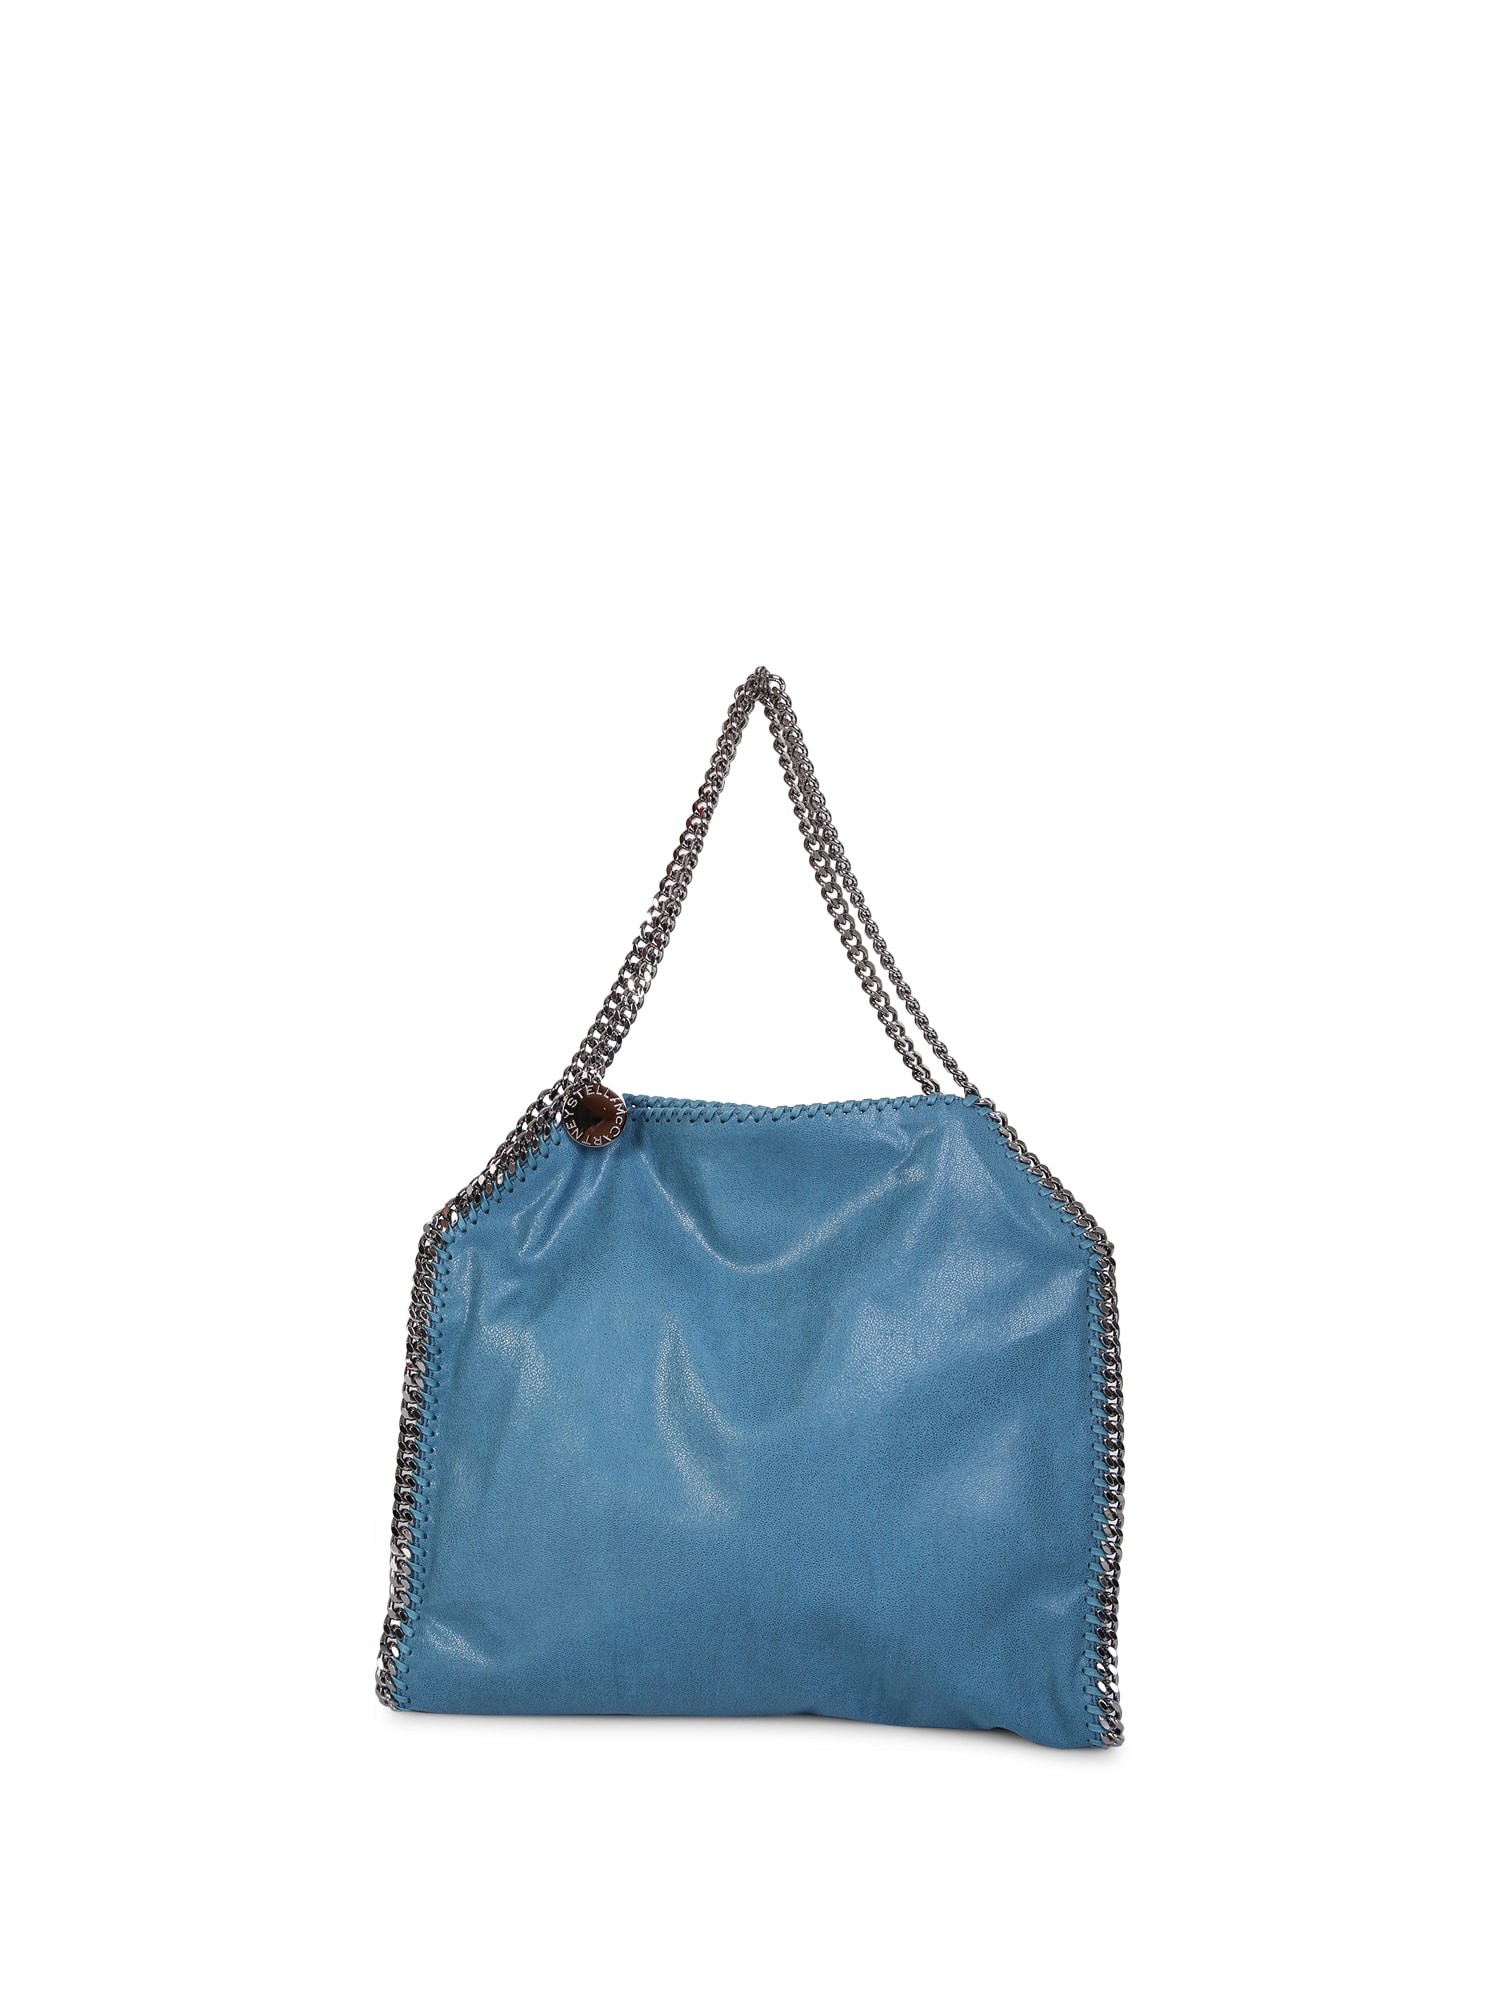 Stella McCartney The Falabella Foldover Bag Blue